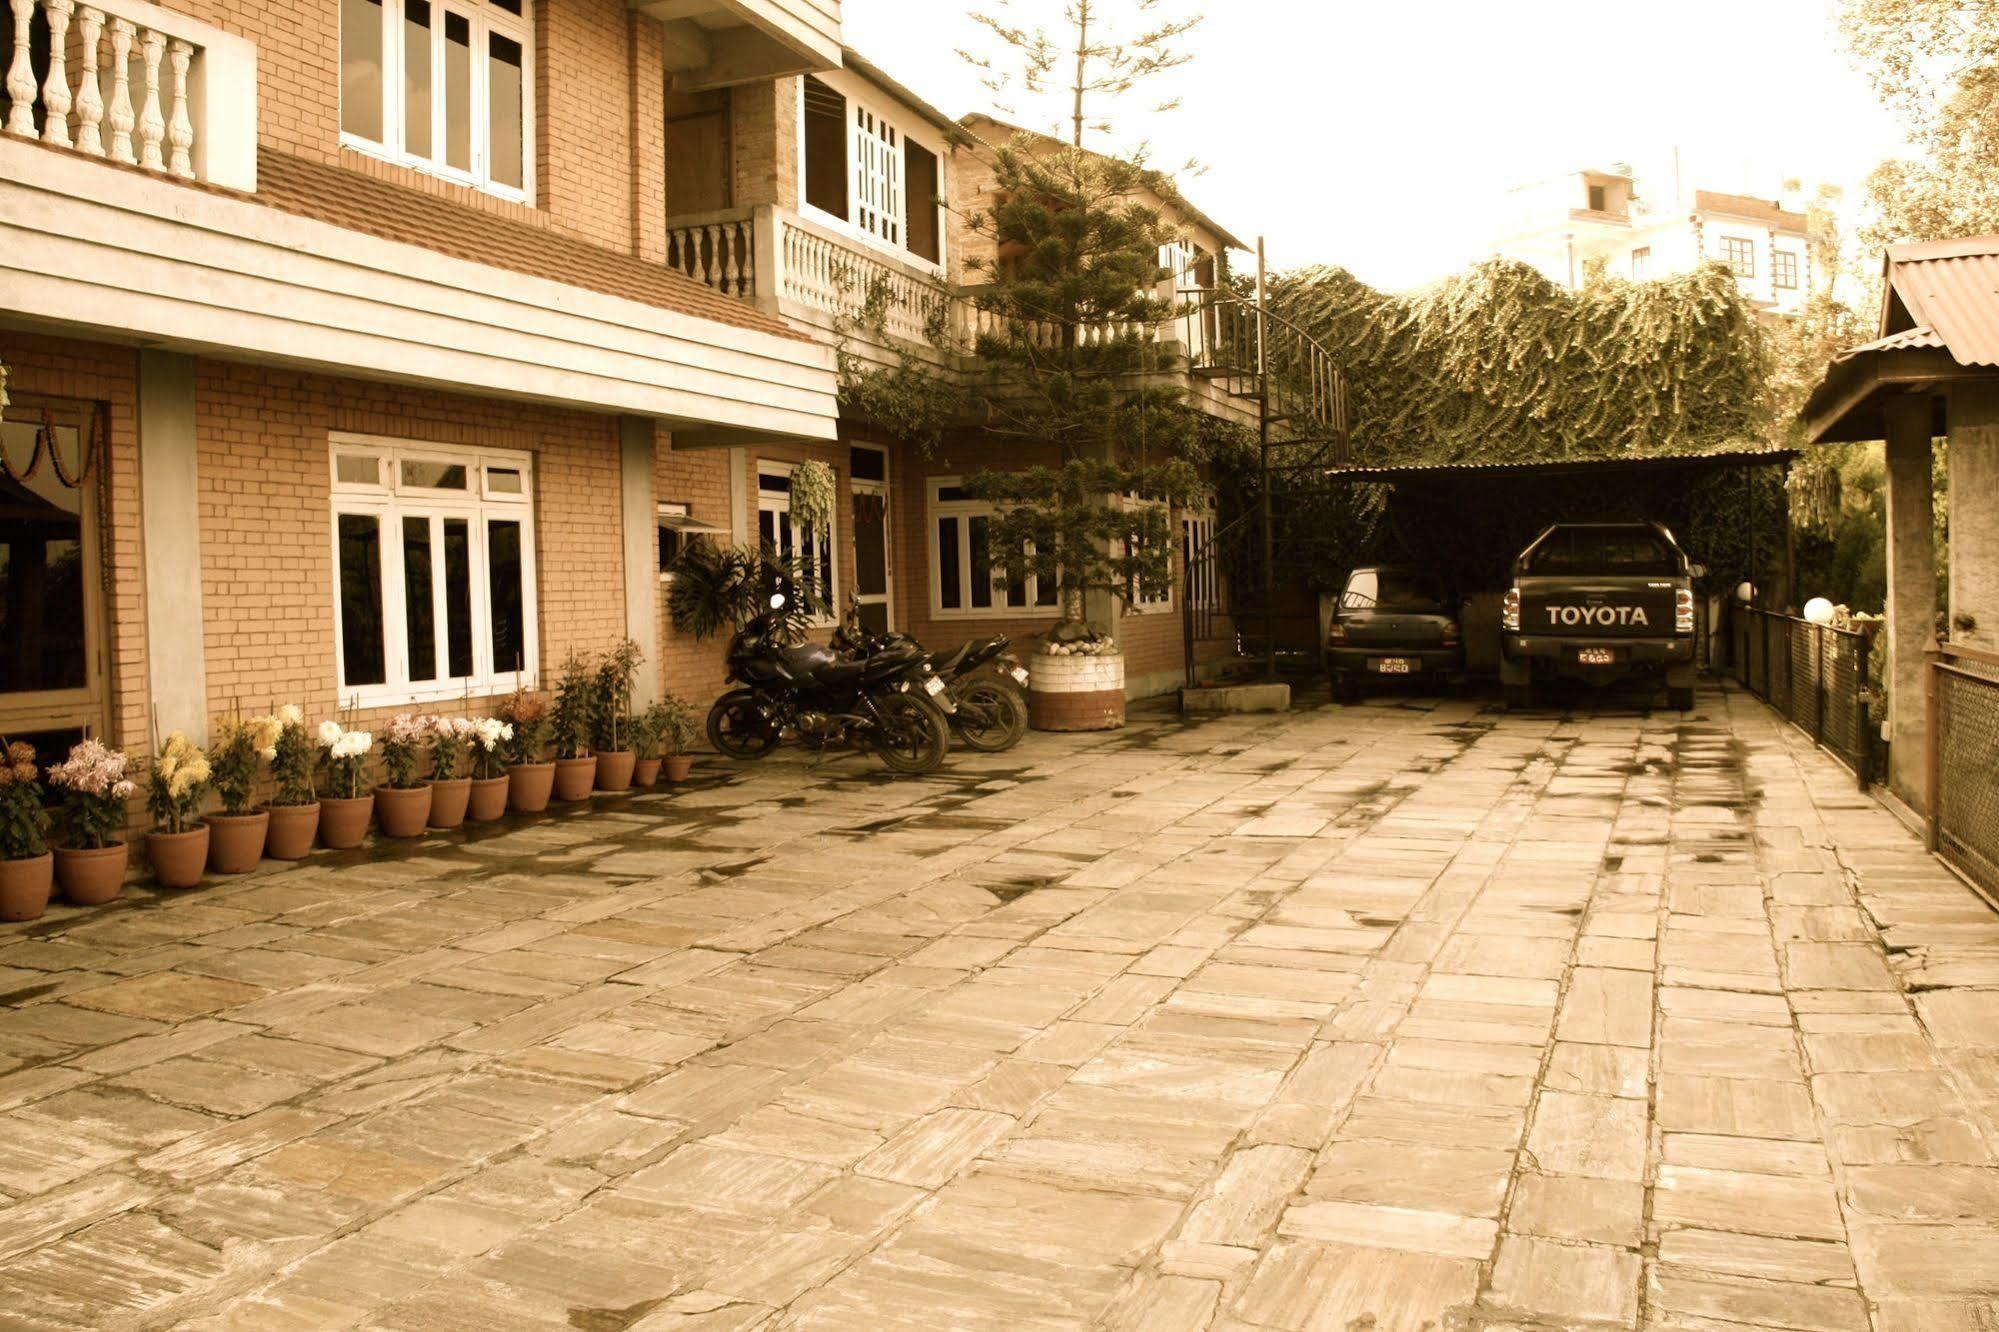 Araniko Village Resort Pvt. Ltd. Bhaktapur Exterior foto